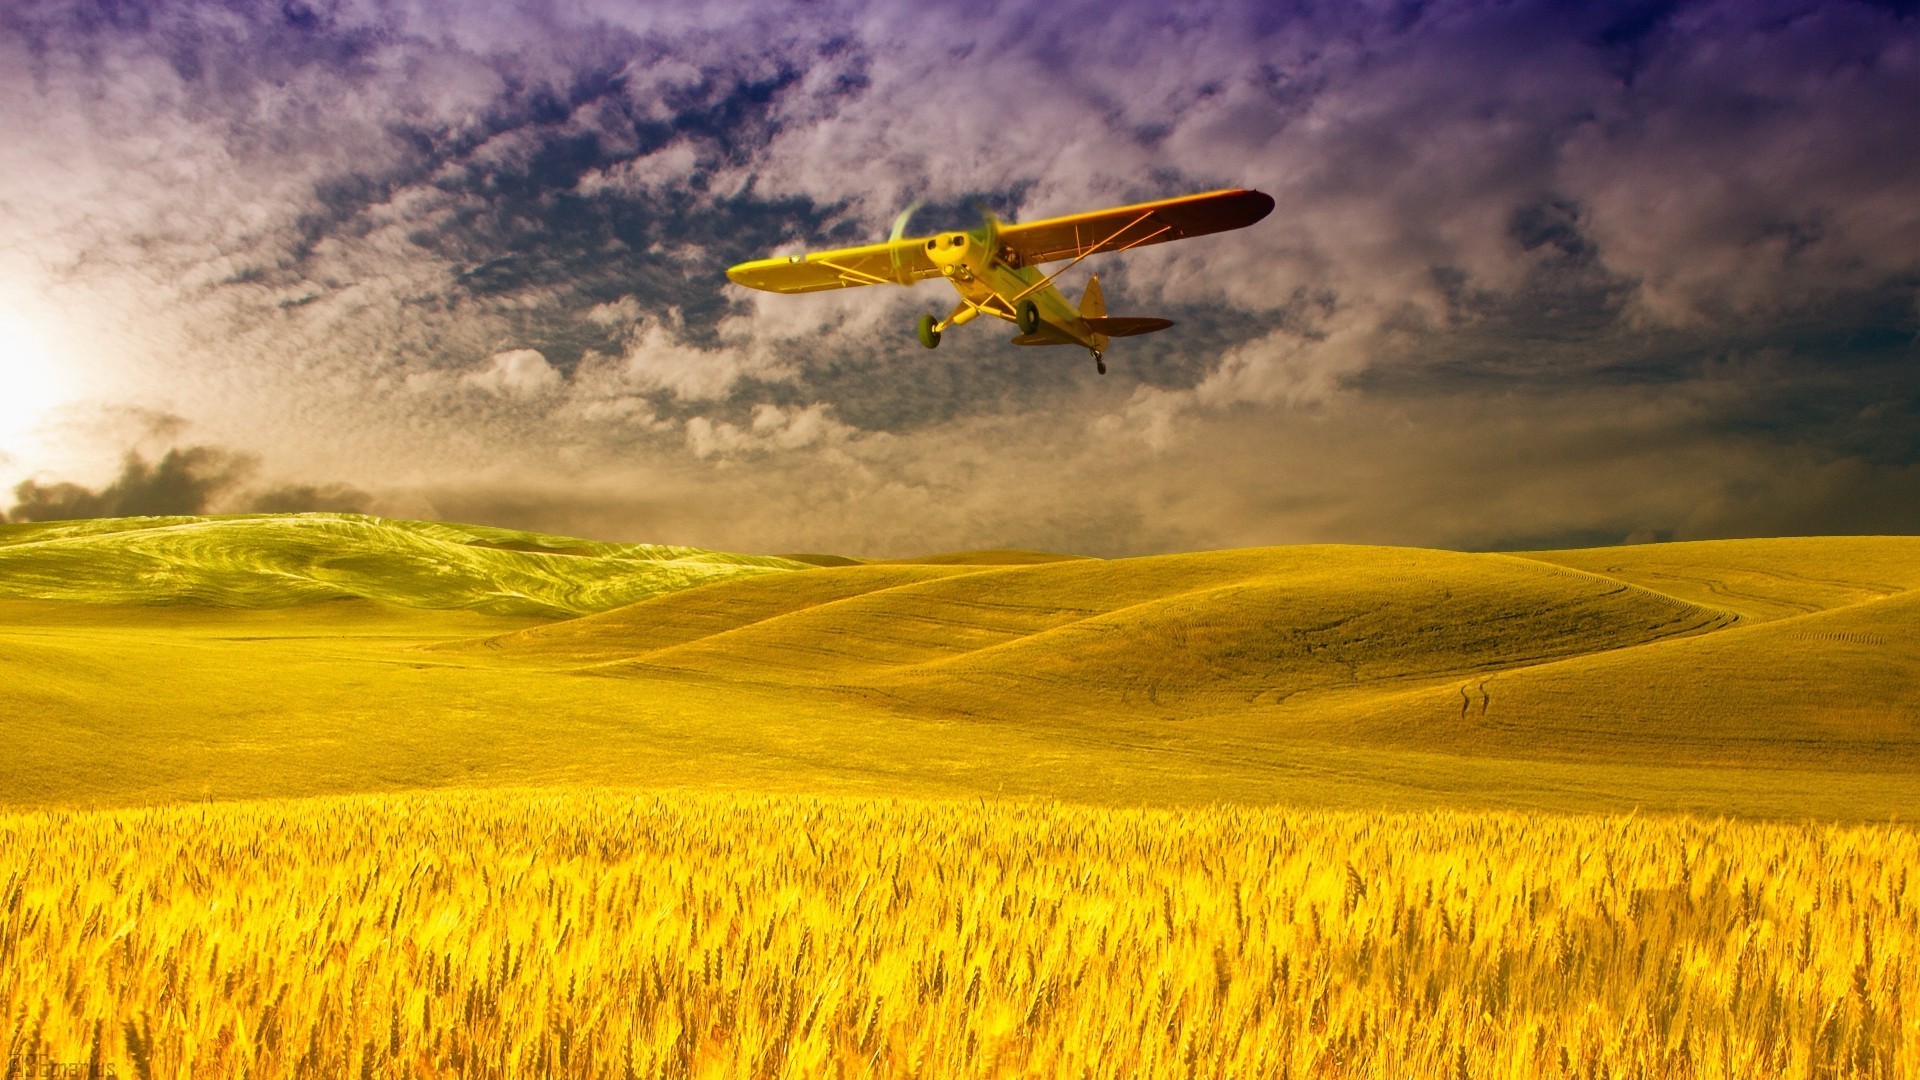 1920x1080 Plane over a field of grain wallpaper